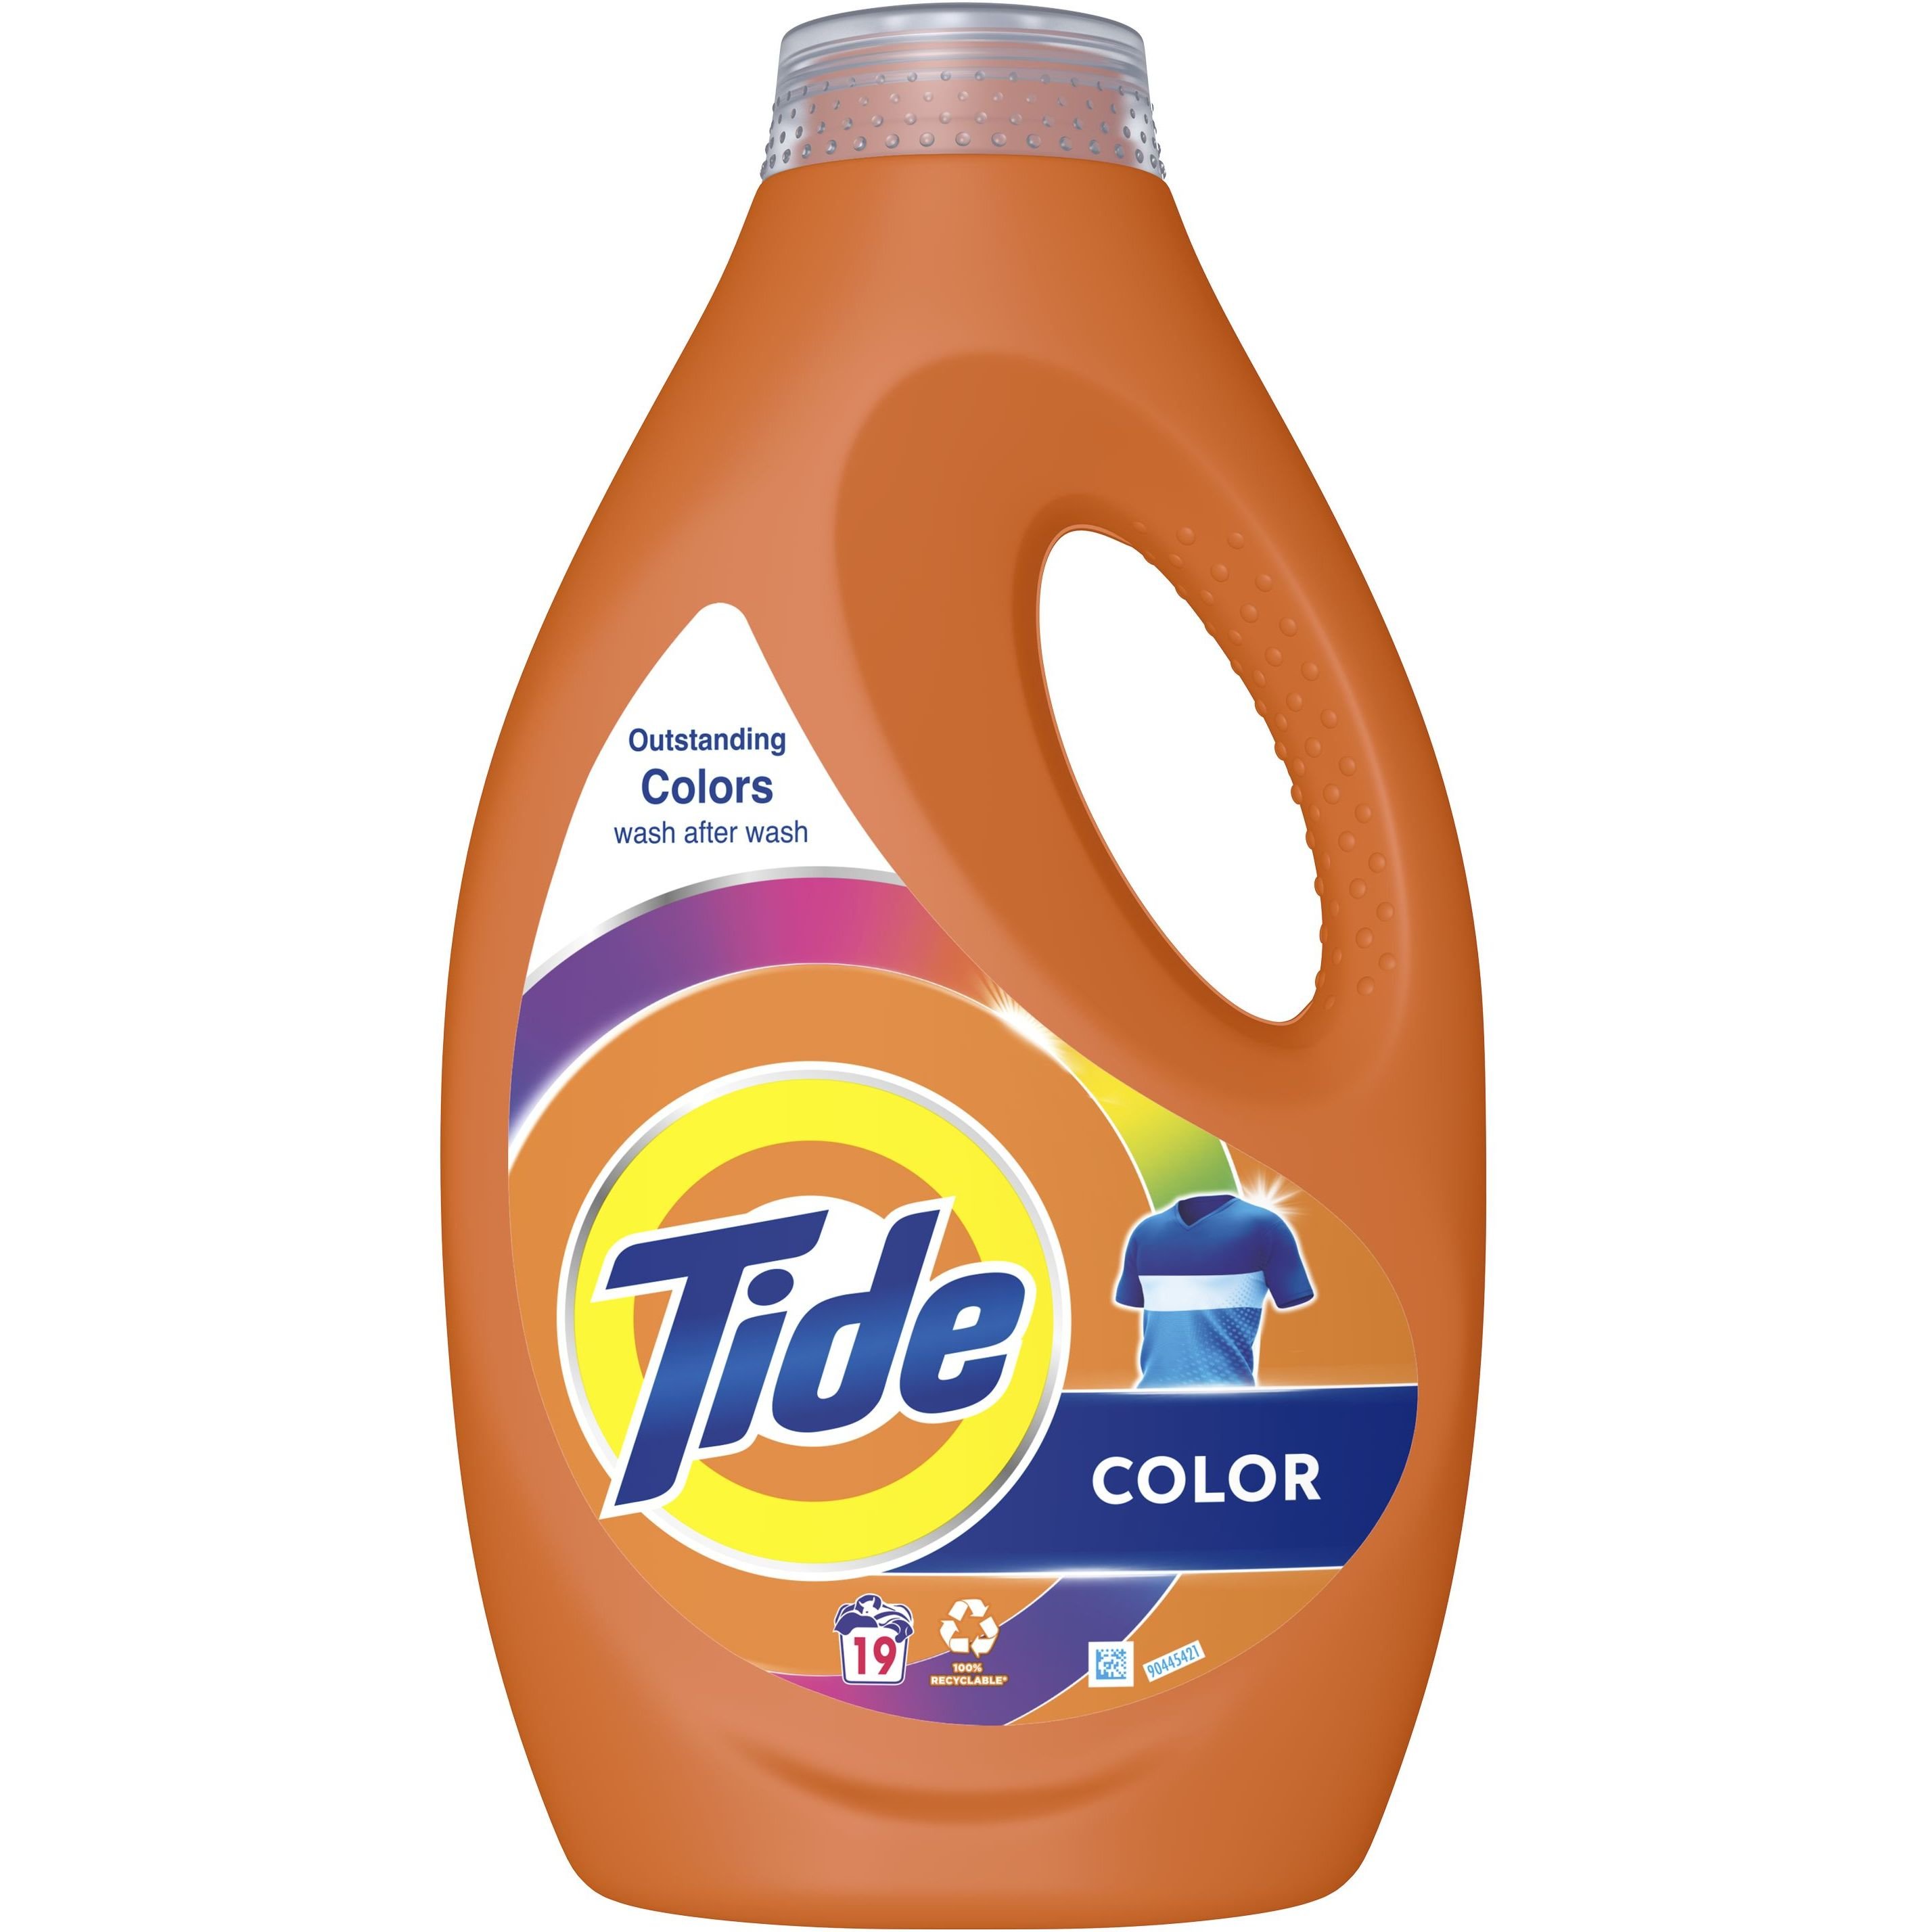 Гель для прання Tide Color, 0,95 л - фото 2